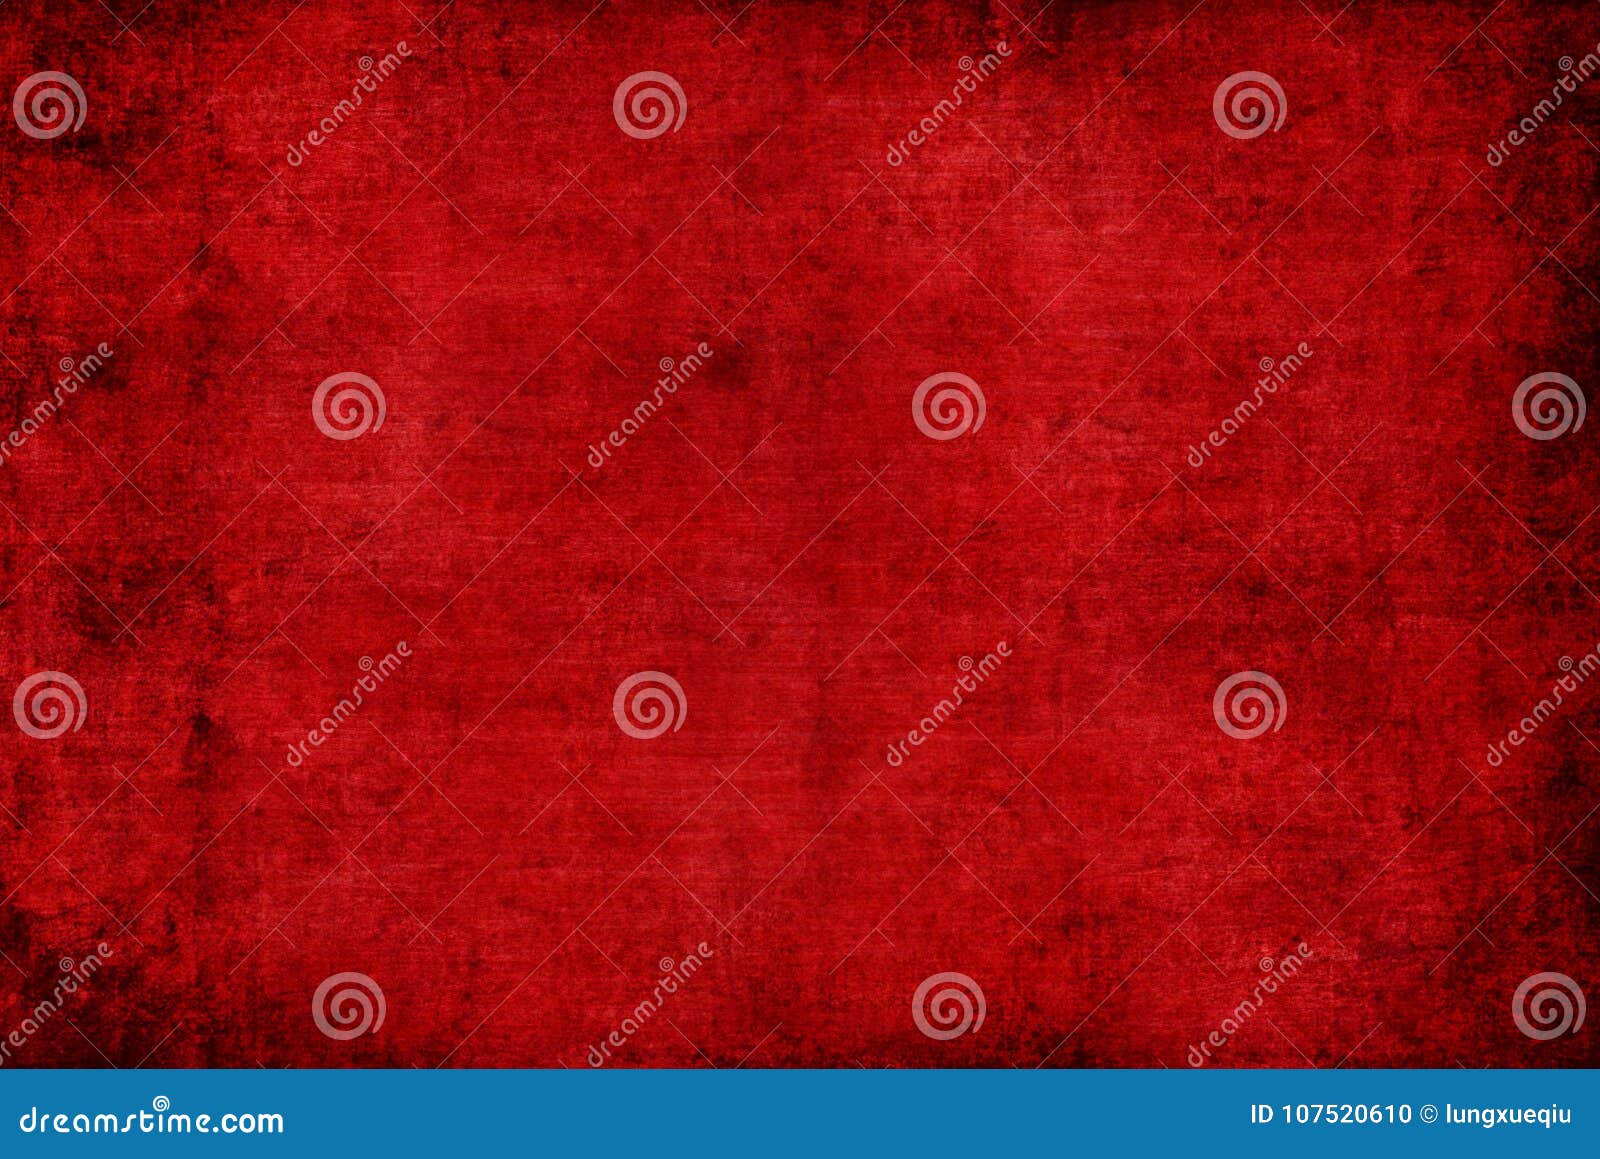 grunge distorted dark red old abstract texture pattern background wallpaper